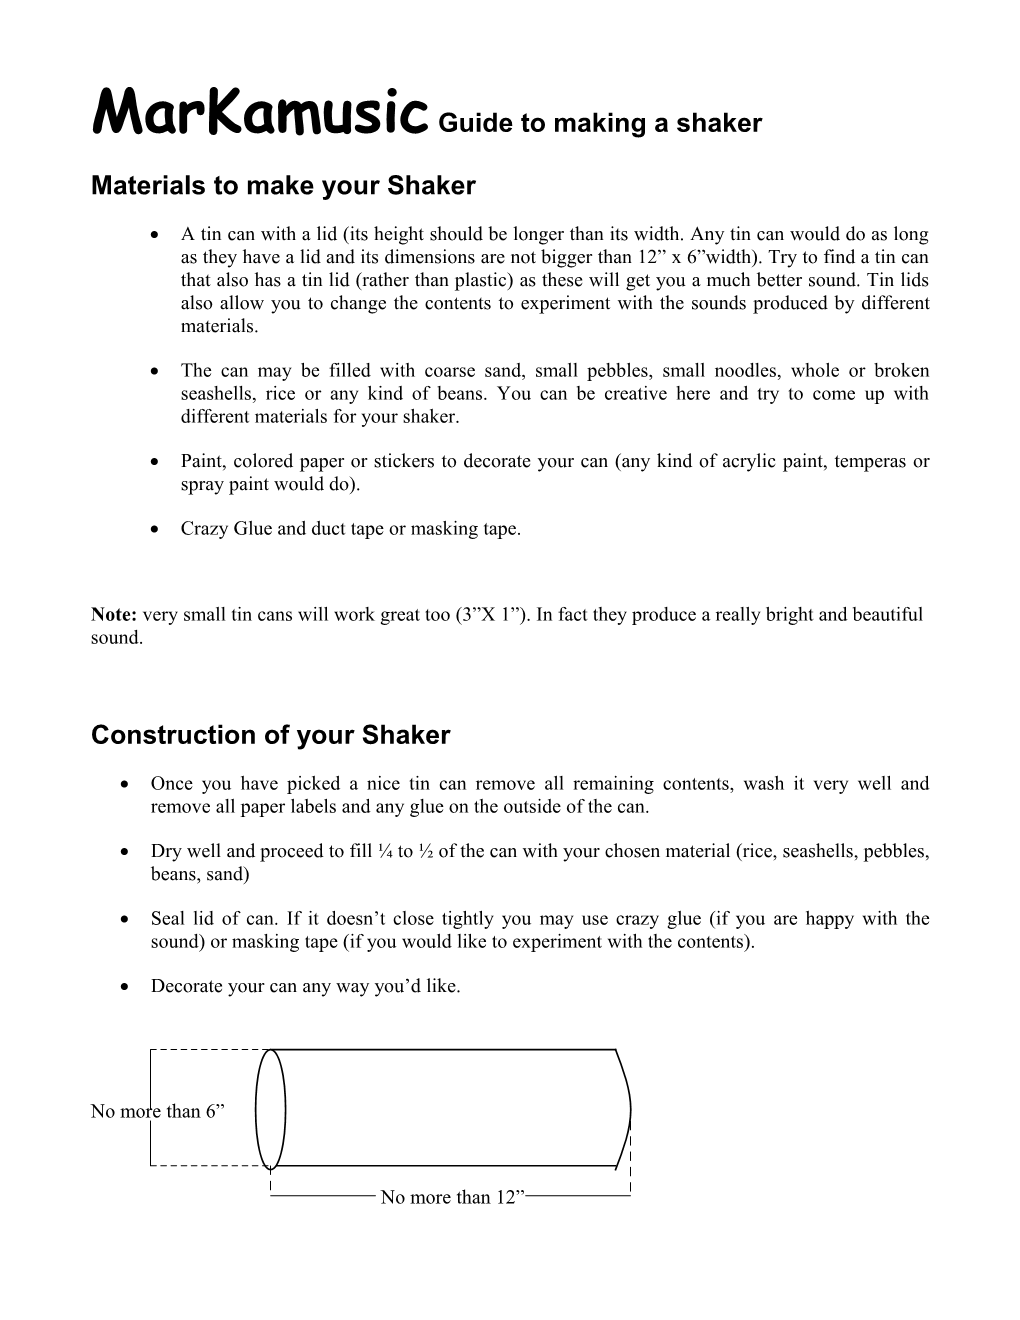 Markamusic Guide to Make a Shaker